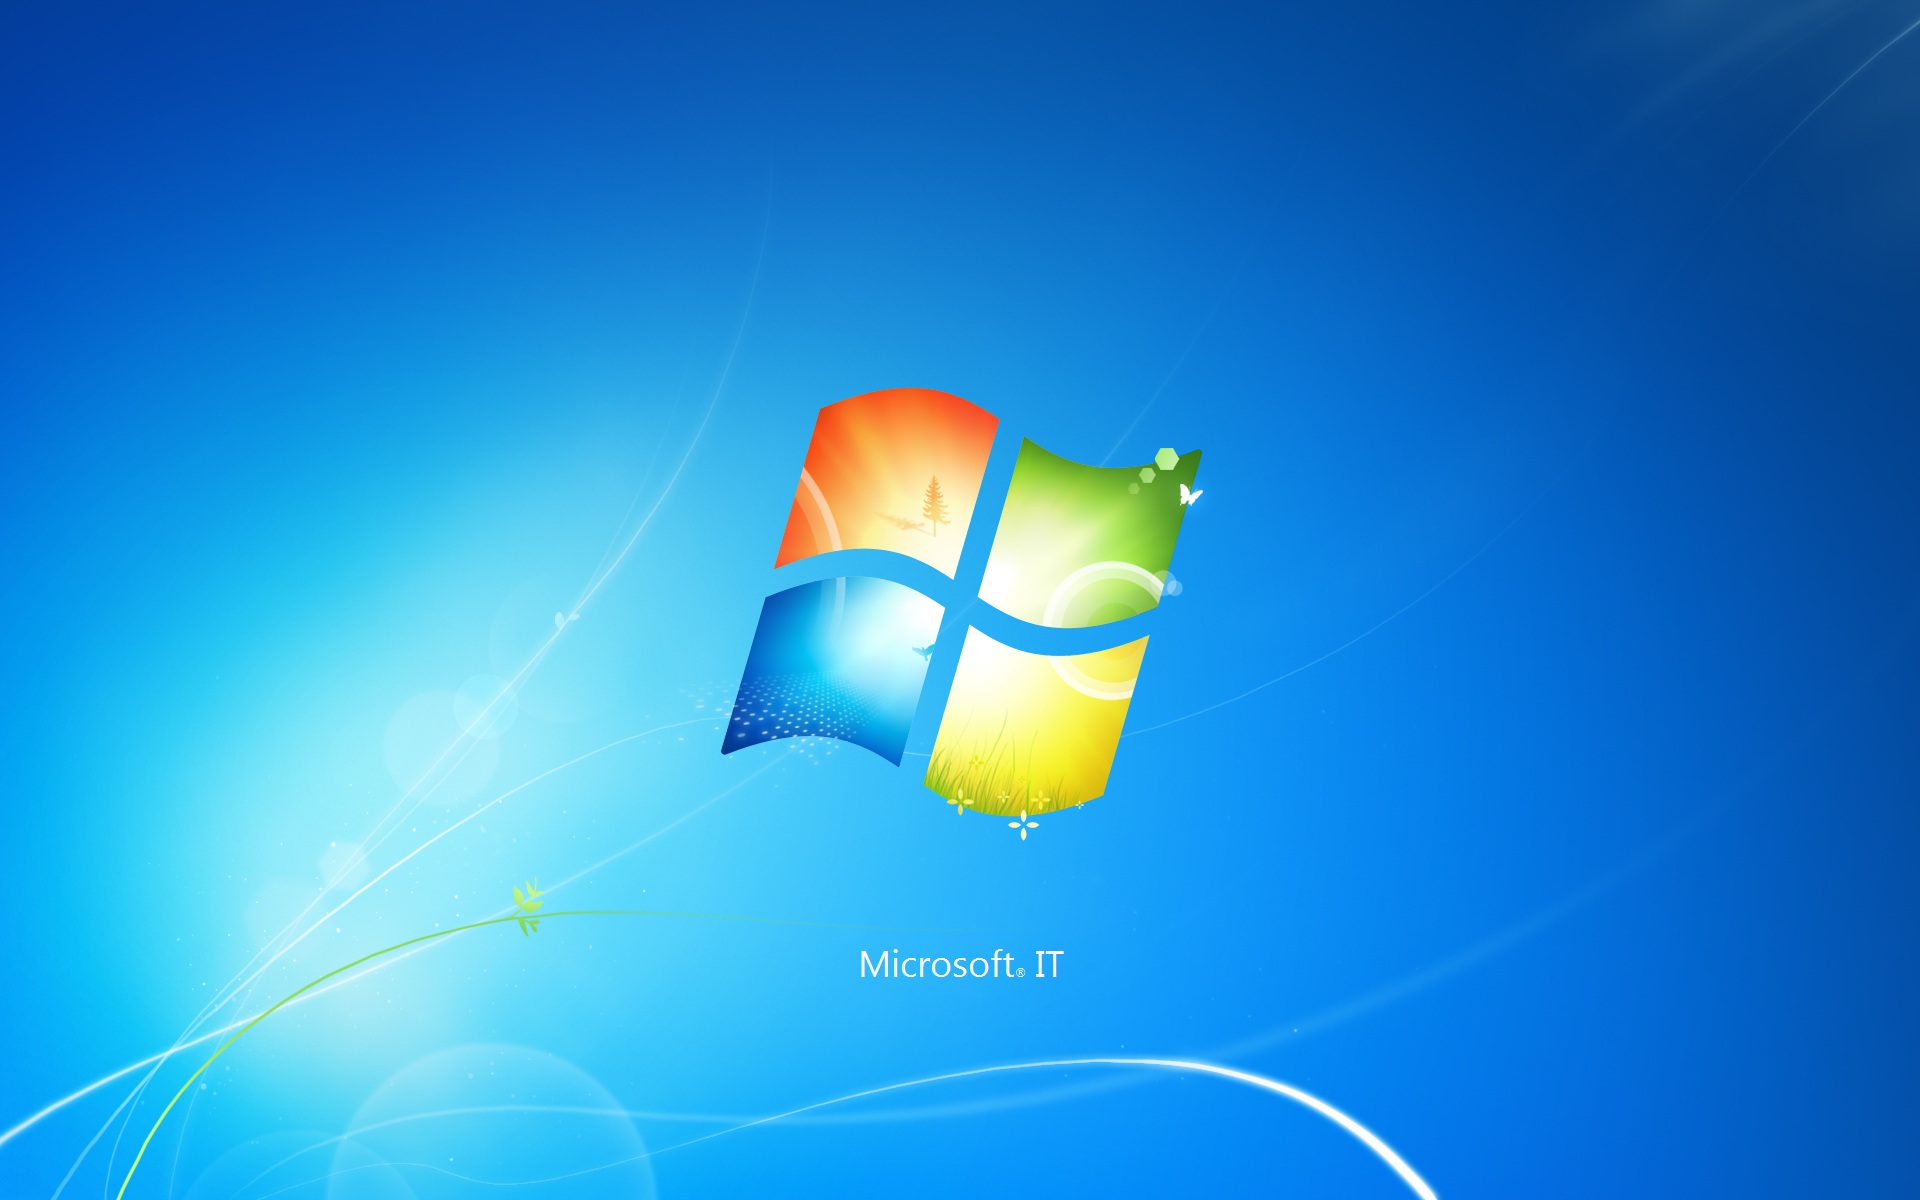 Microsoft Pictures For Desktop Wallpaper Amazing